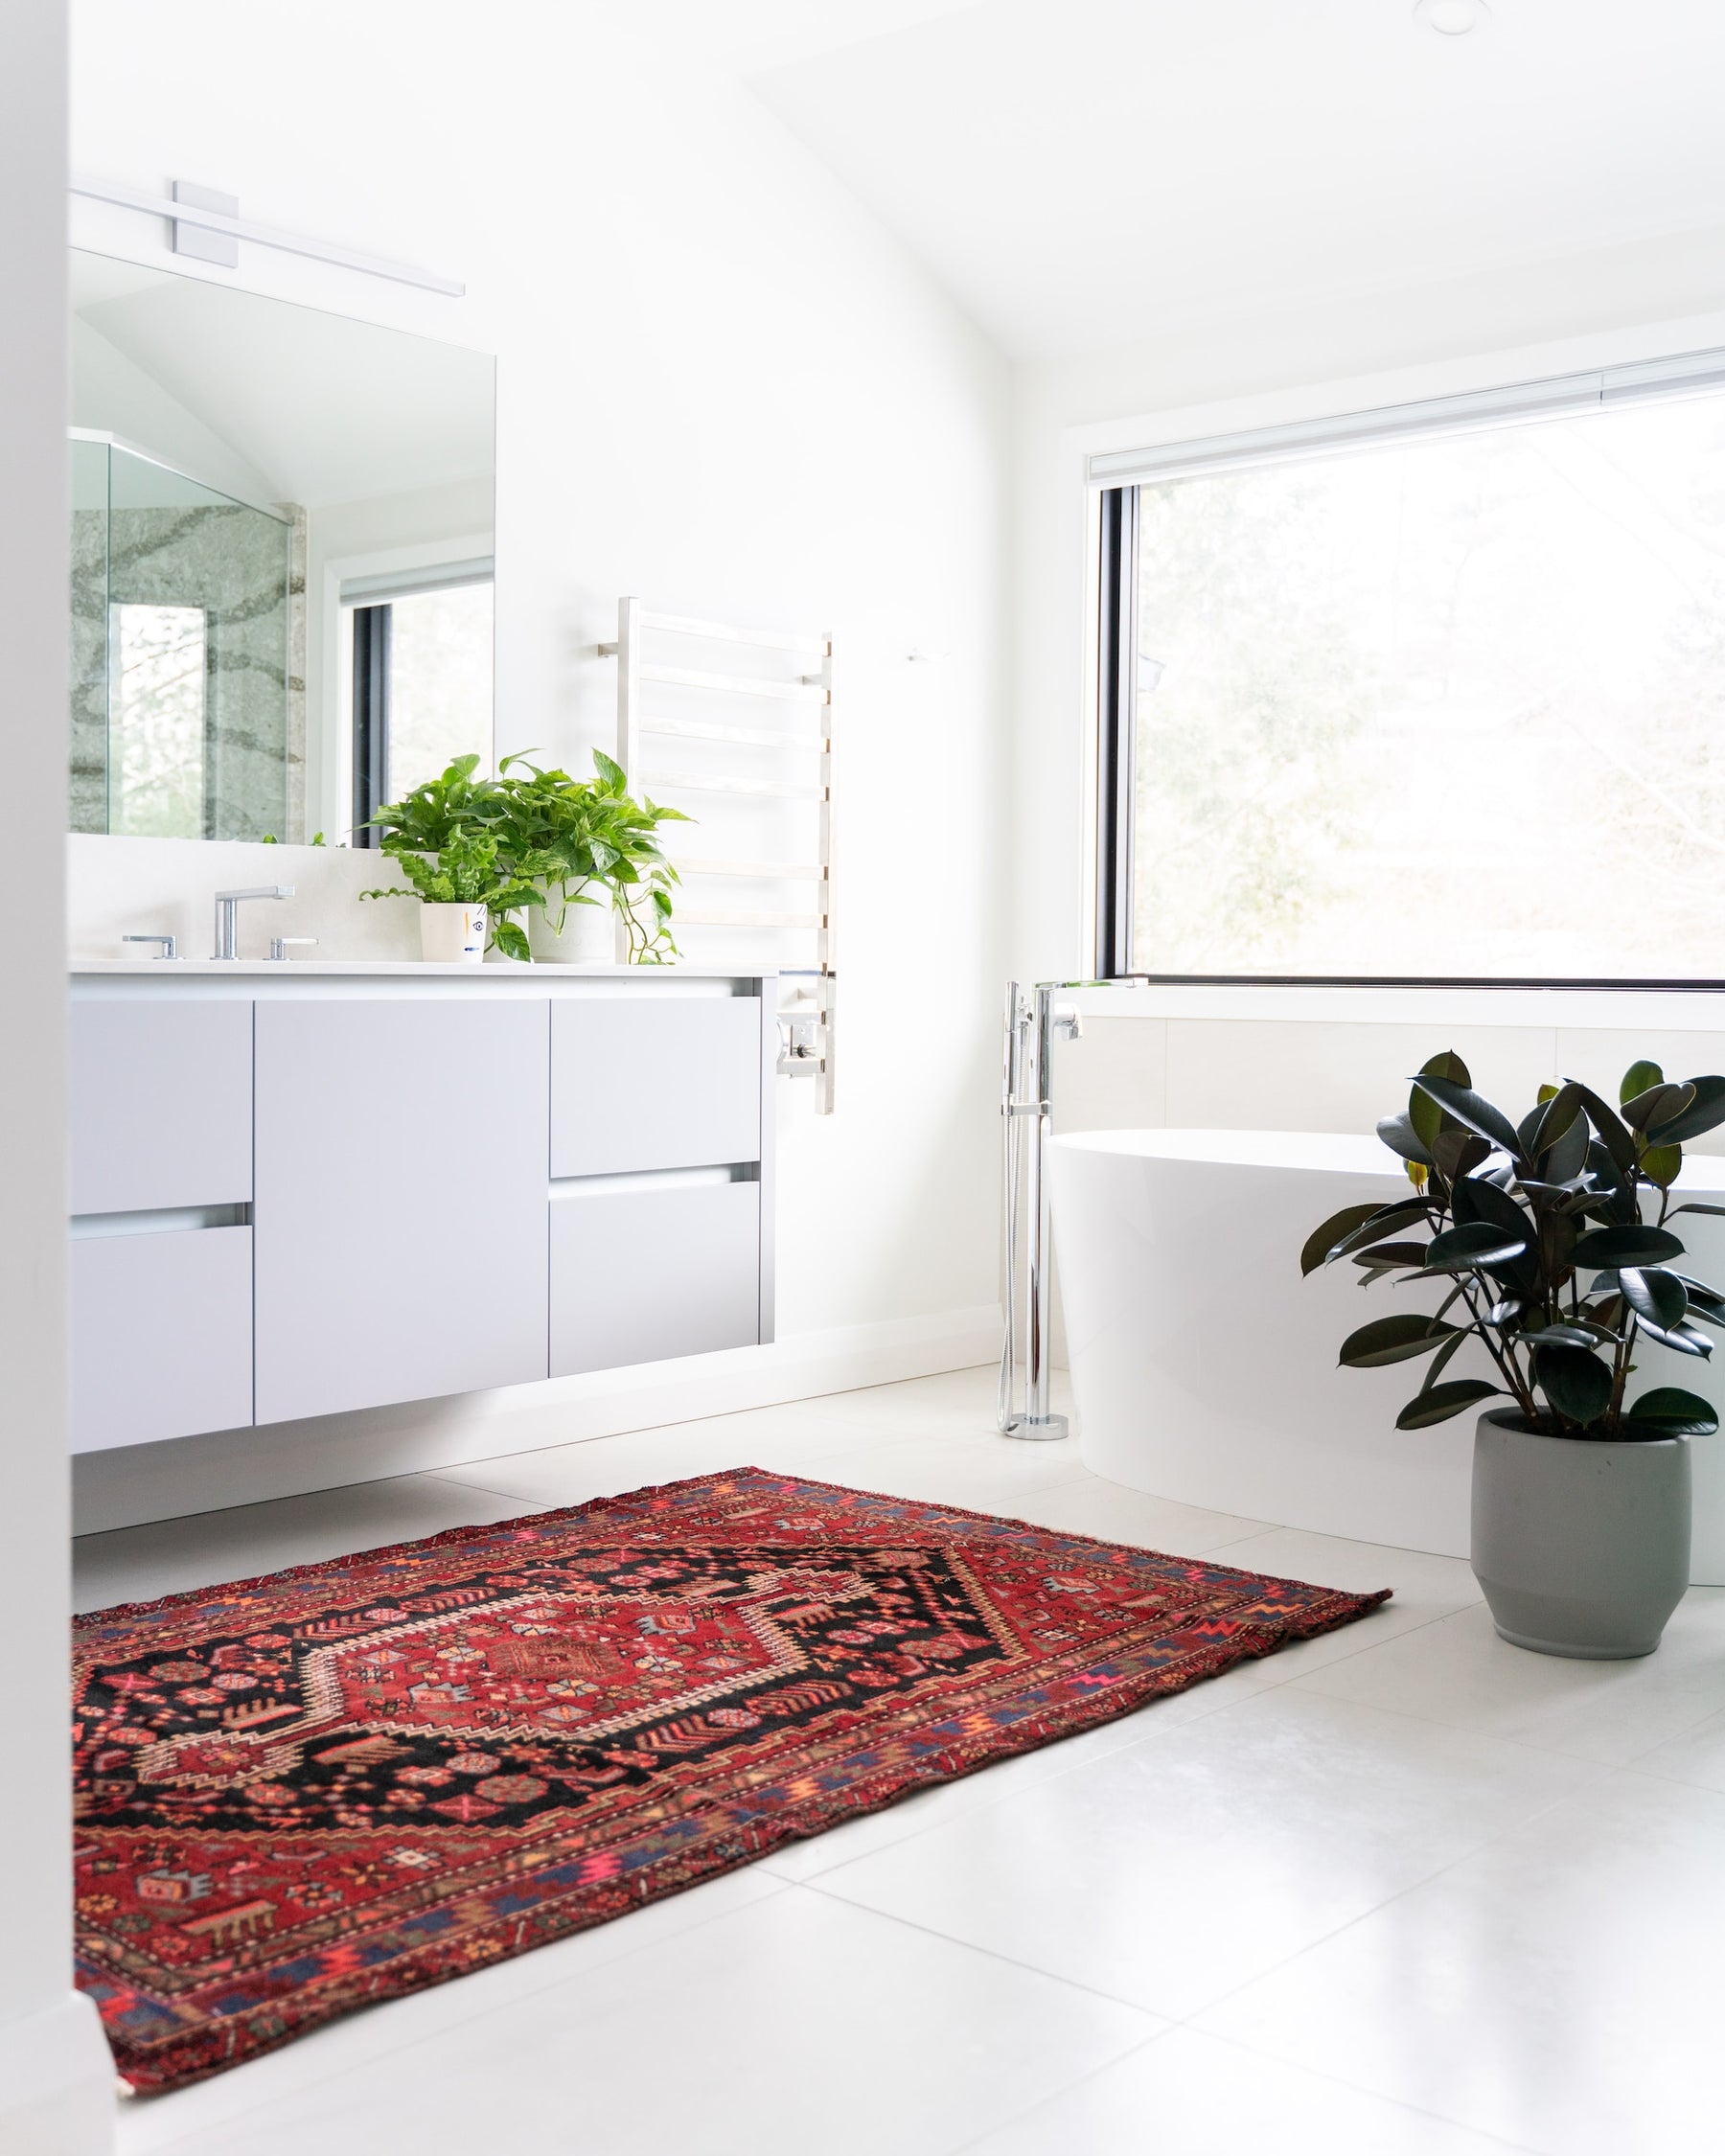 DIY Bathroom Vanity Ideas: Transform Your Space on a Budget